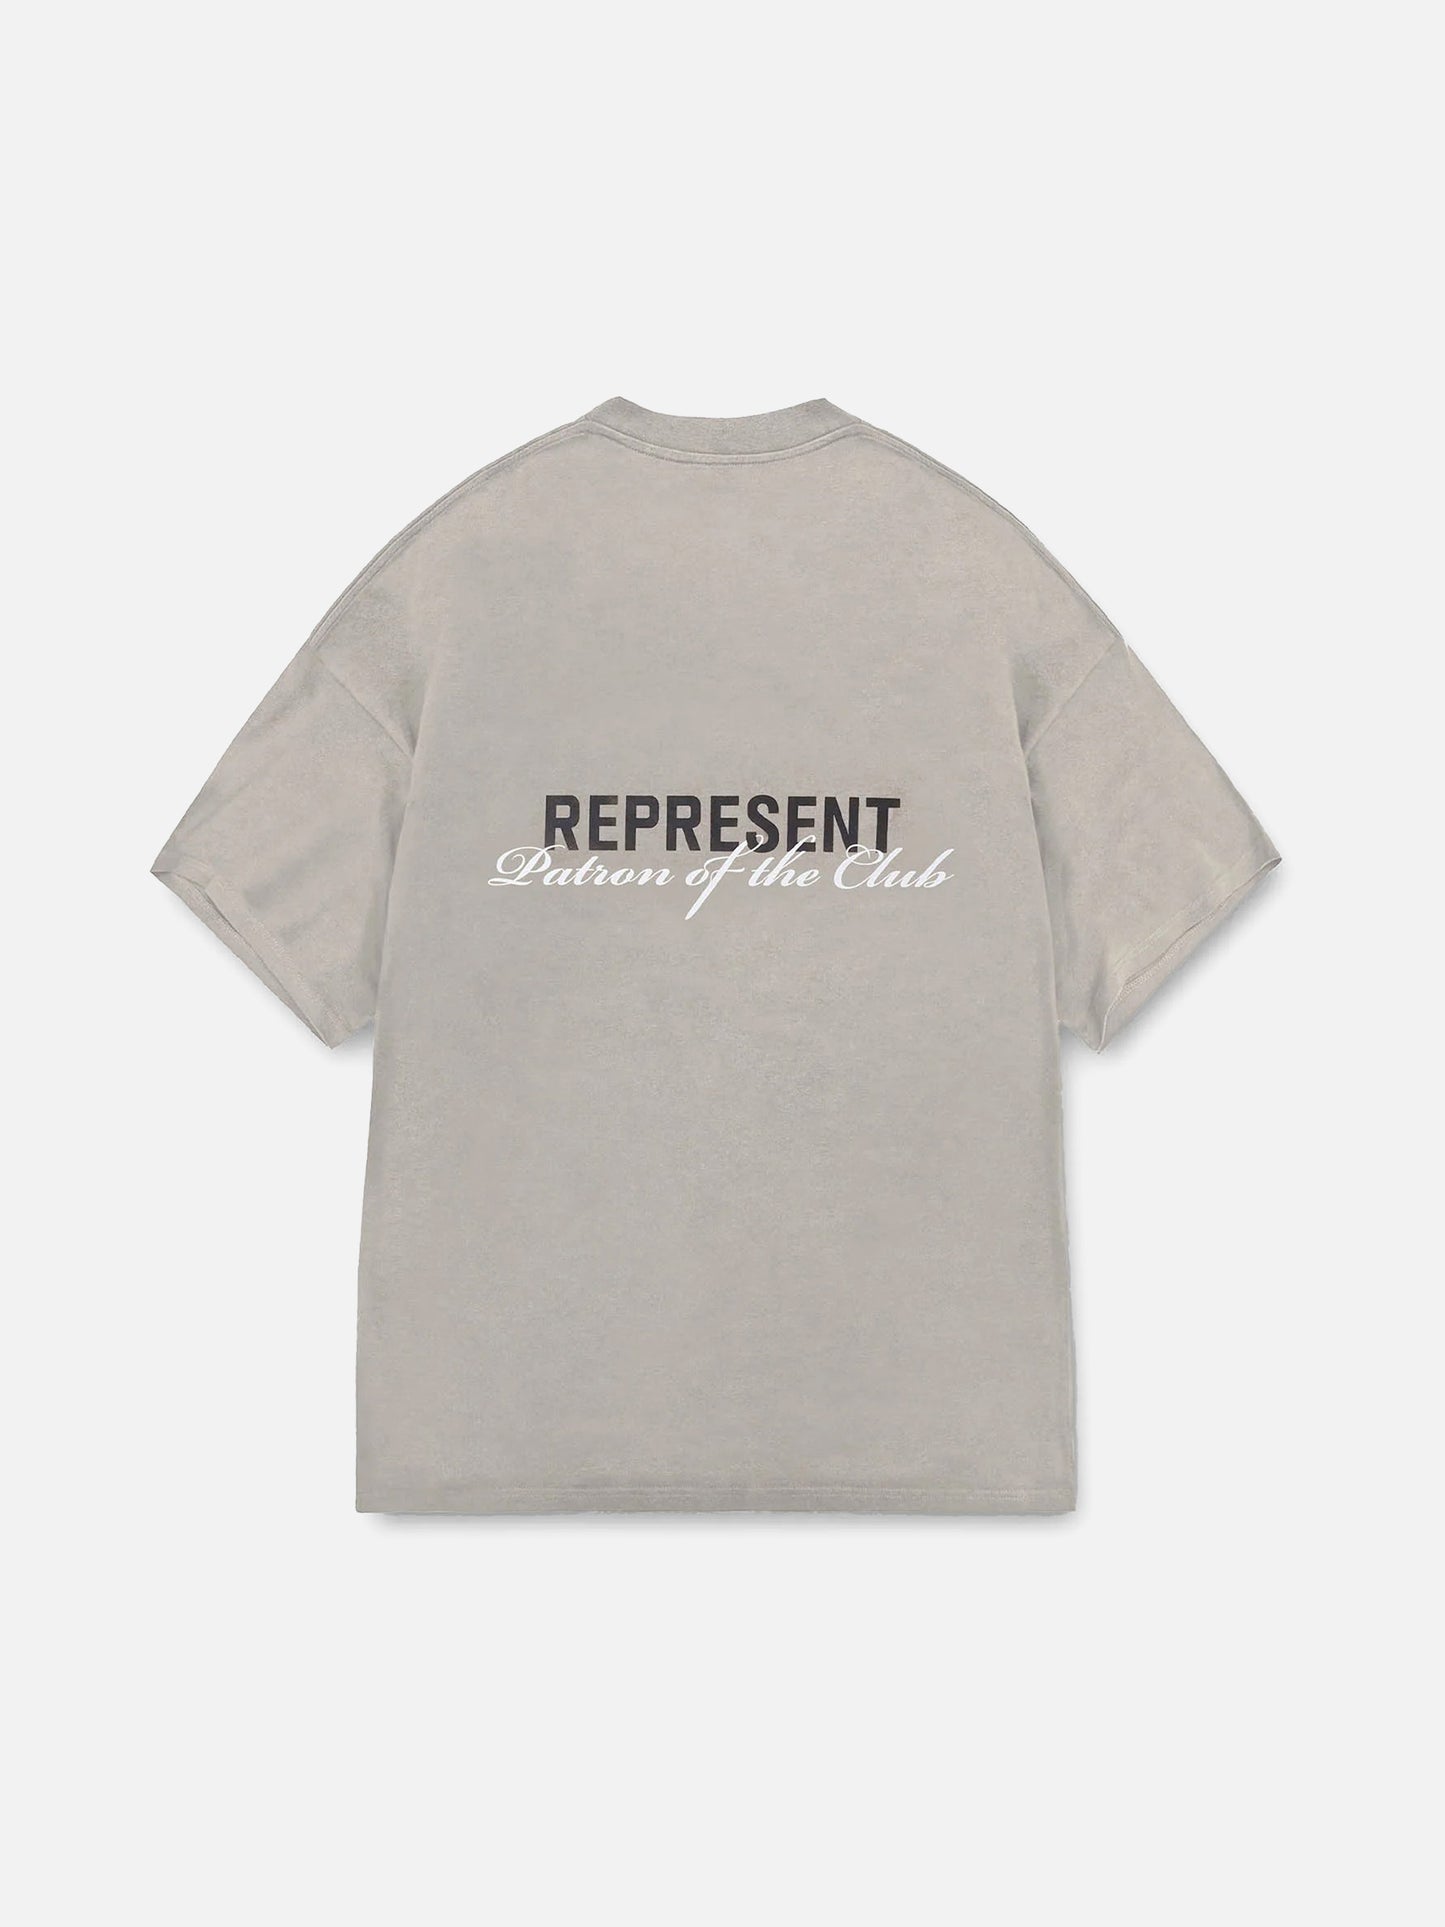 REPRESENT - Patron Of The Club T-Shirt